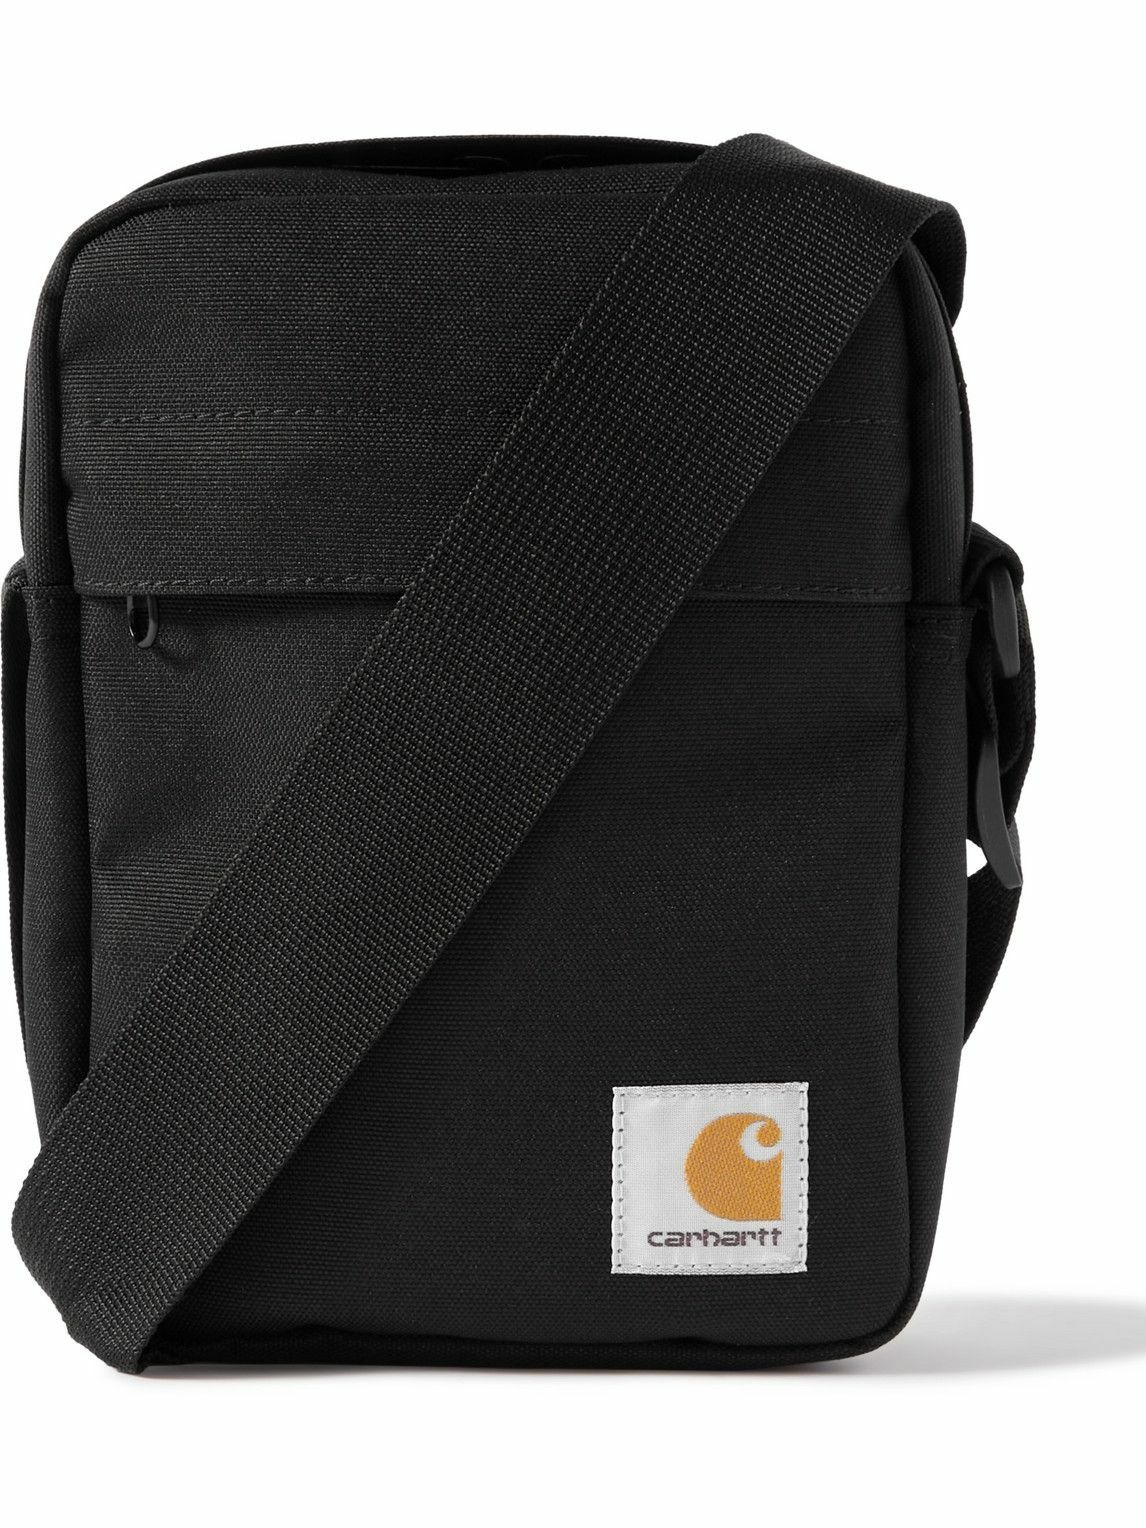 Crossover - The latest Carhartt WIP Delta shoulder bag